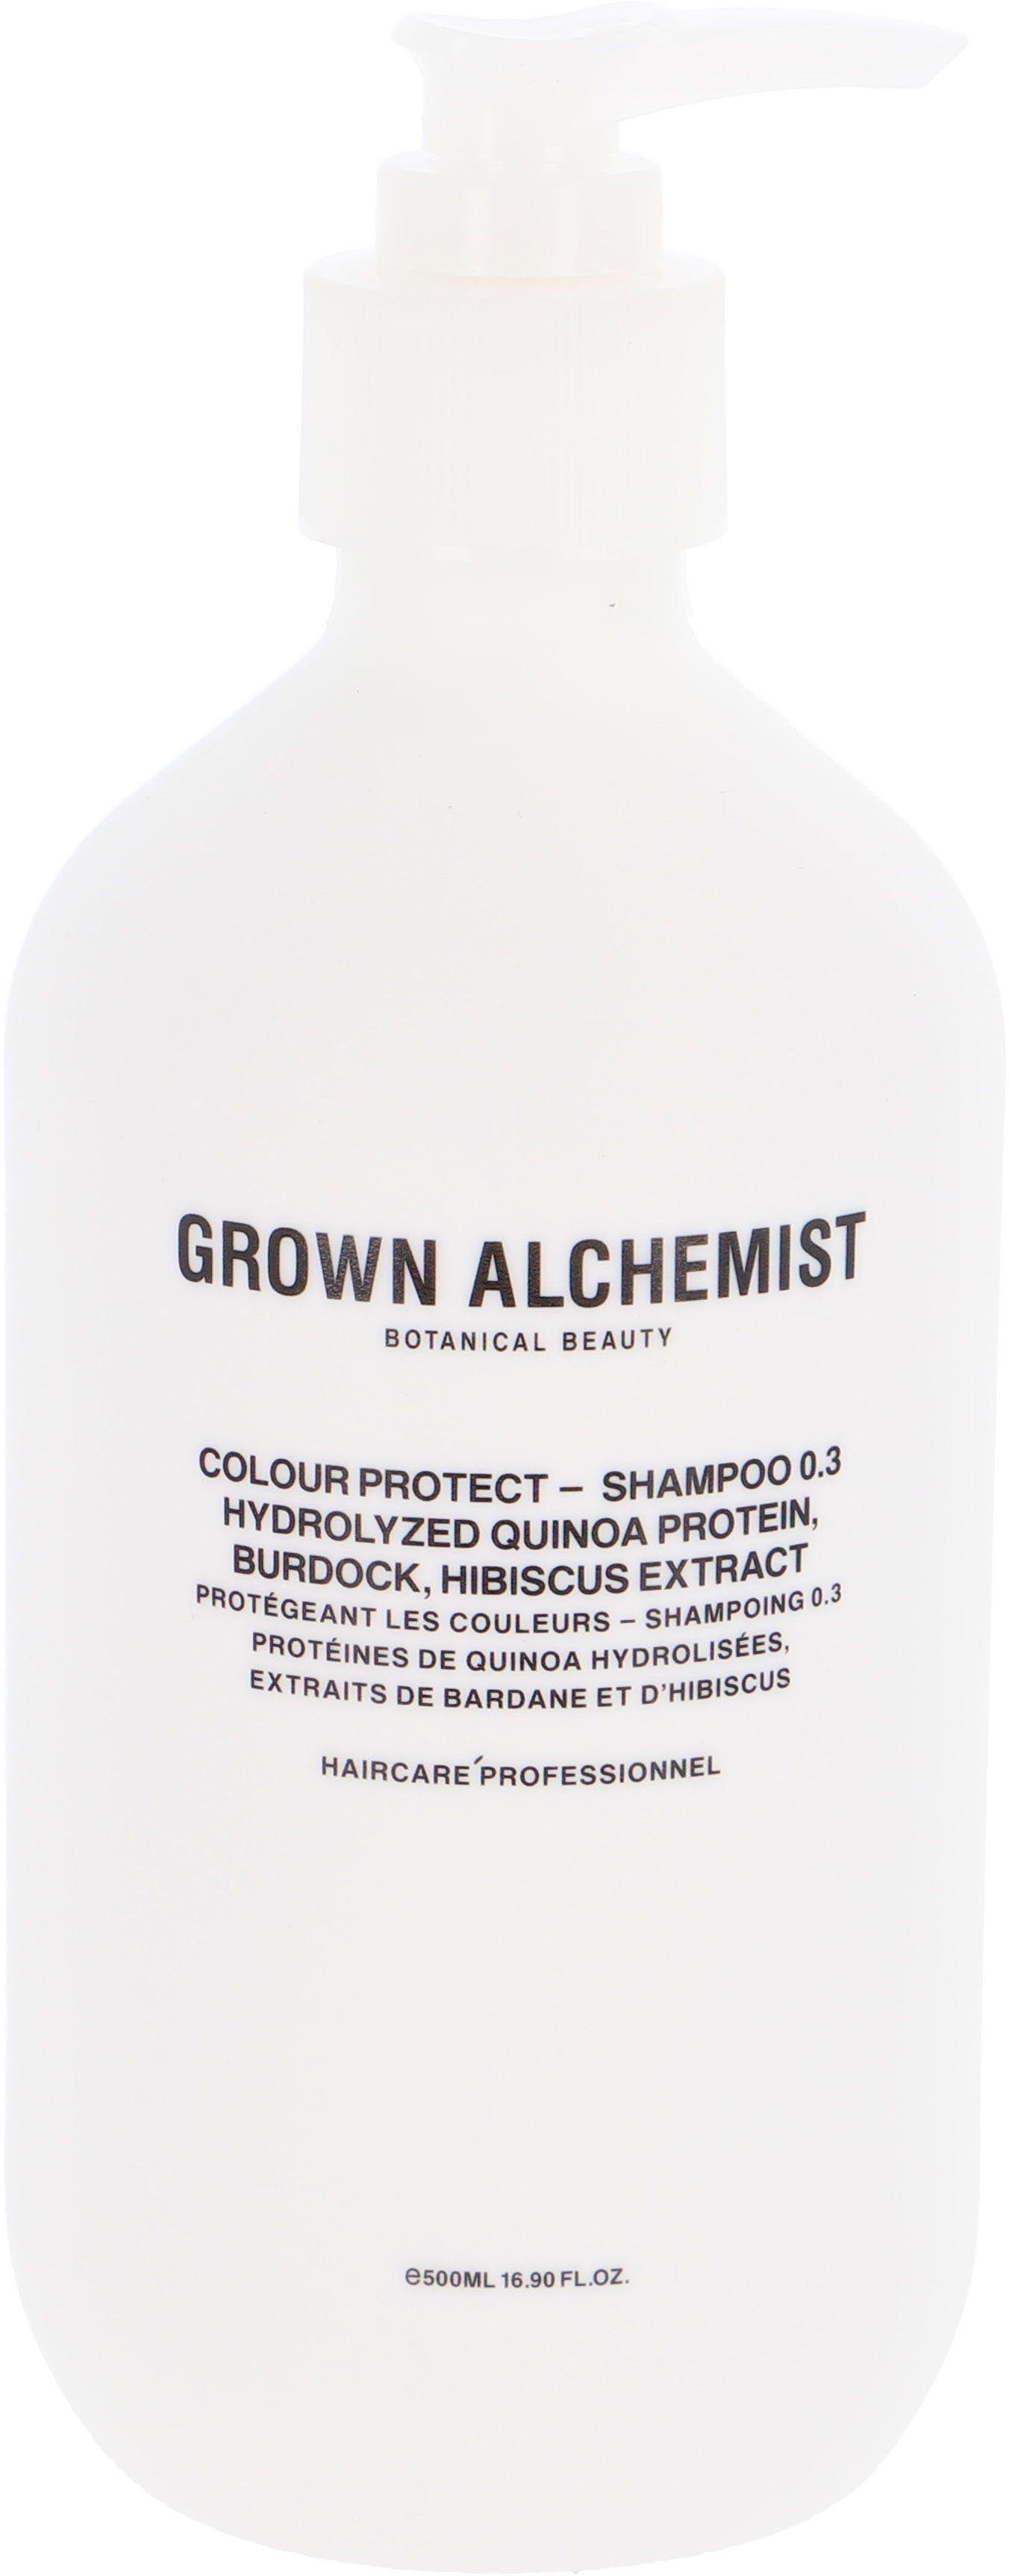 Hydrolyzed ALCHEMIST Haarshampoo Extract 0.3, Quinoa Protect - Burdock, Hibiscus Shampoo GROWN Colour Protein,